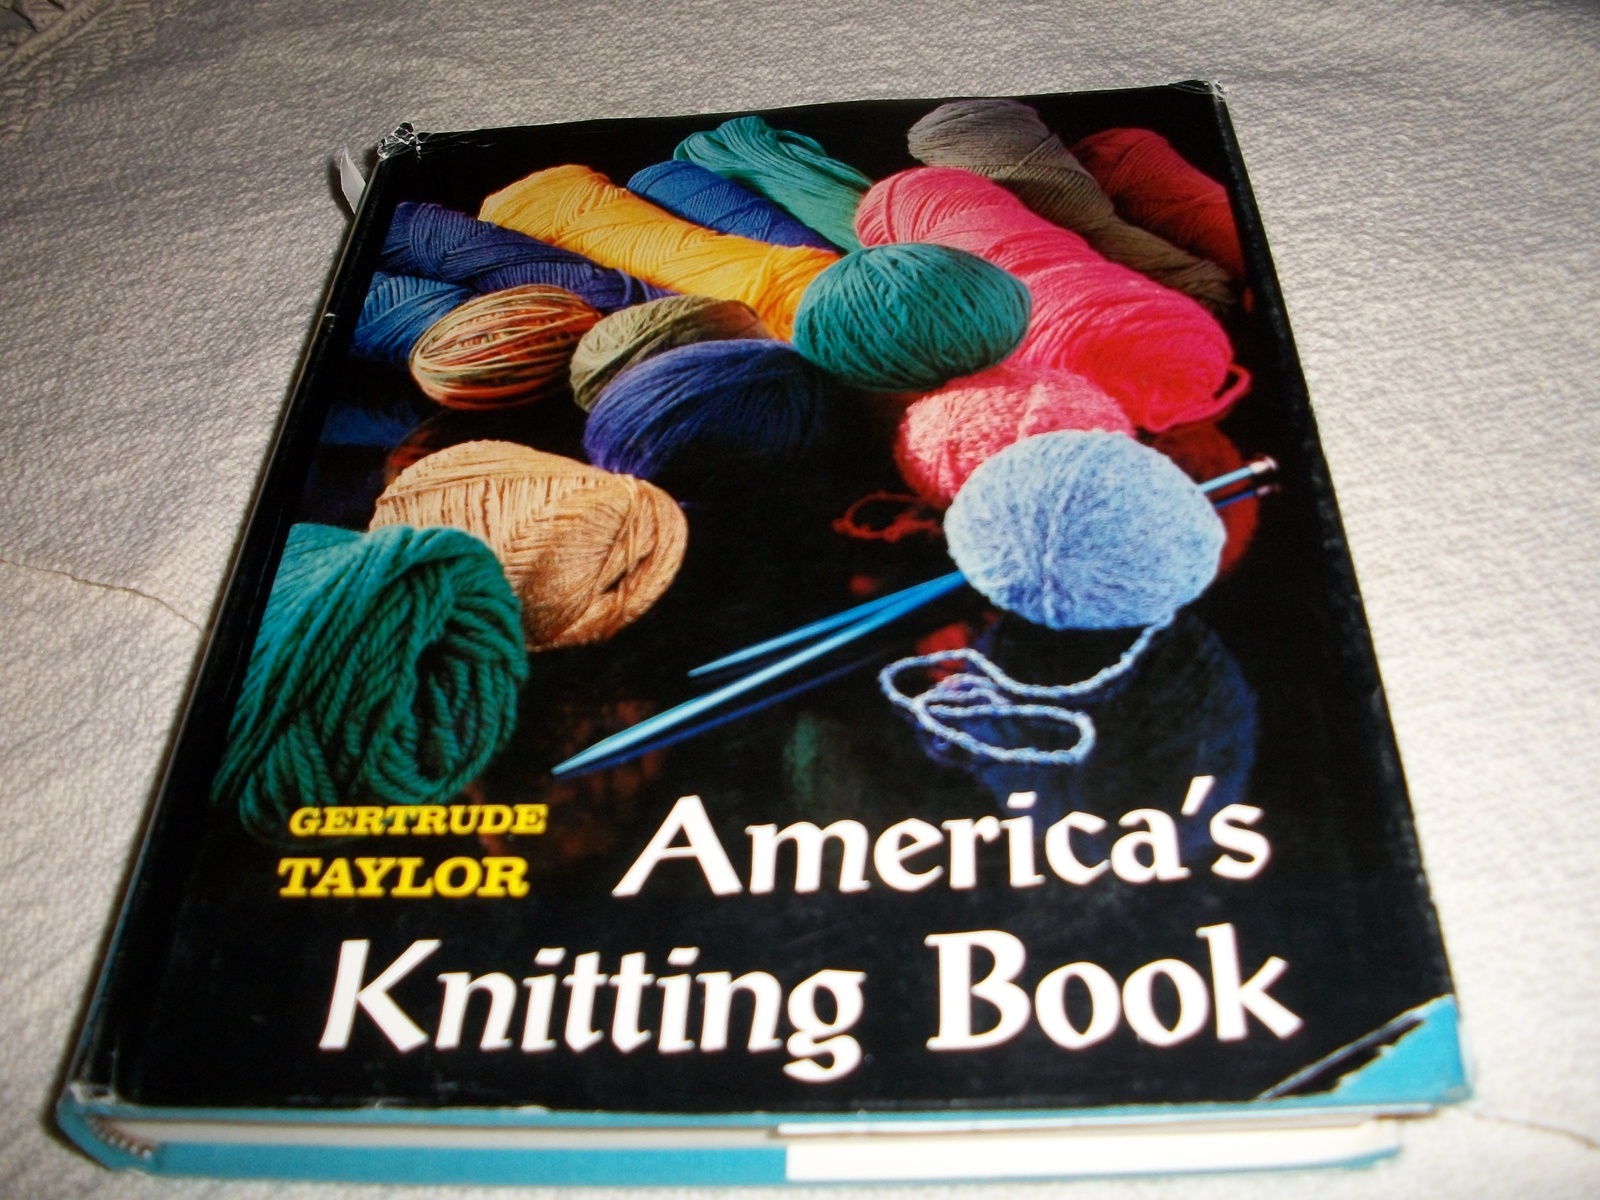 America's Knitting Book - $16.00